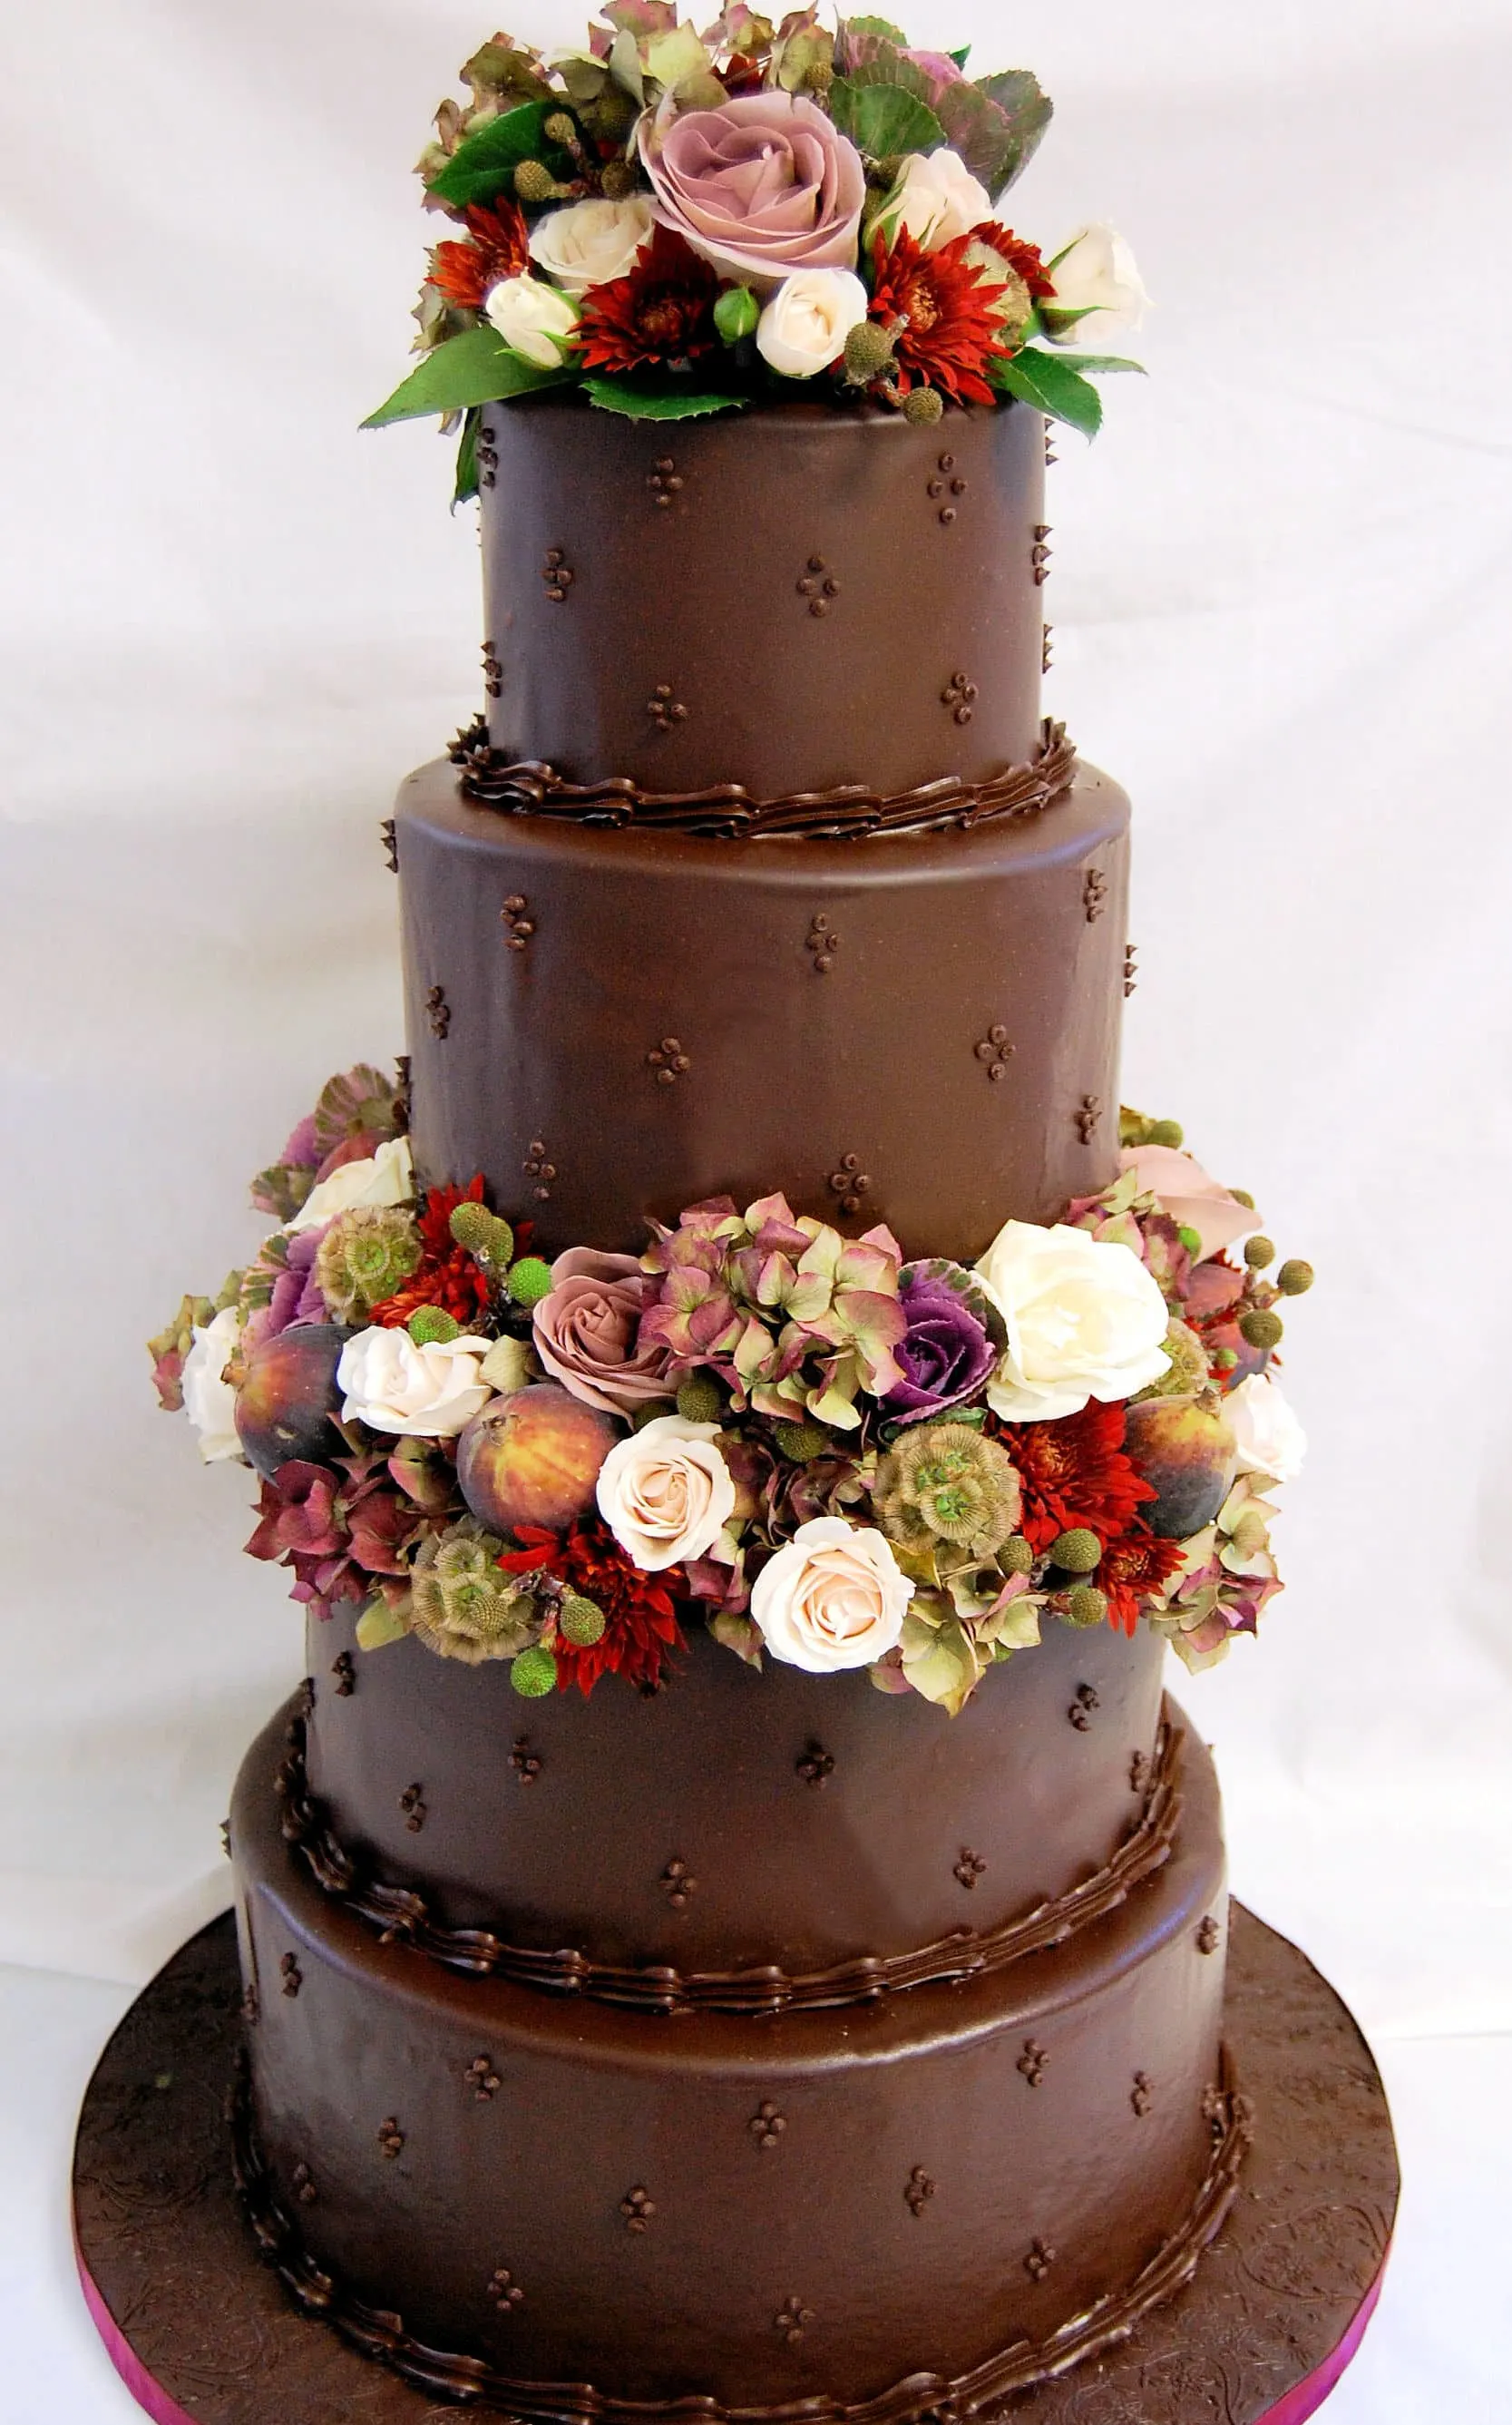 Chocolate ganache wedding cake | Floral wedding cakes, Chocolate cake  designs, Ganache cake